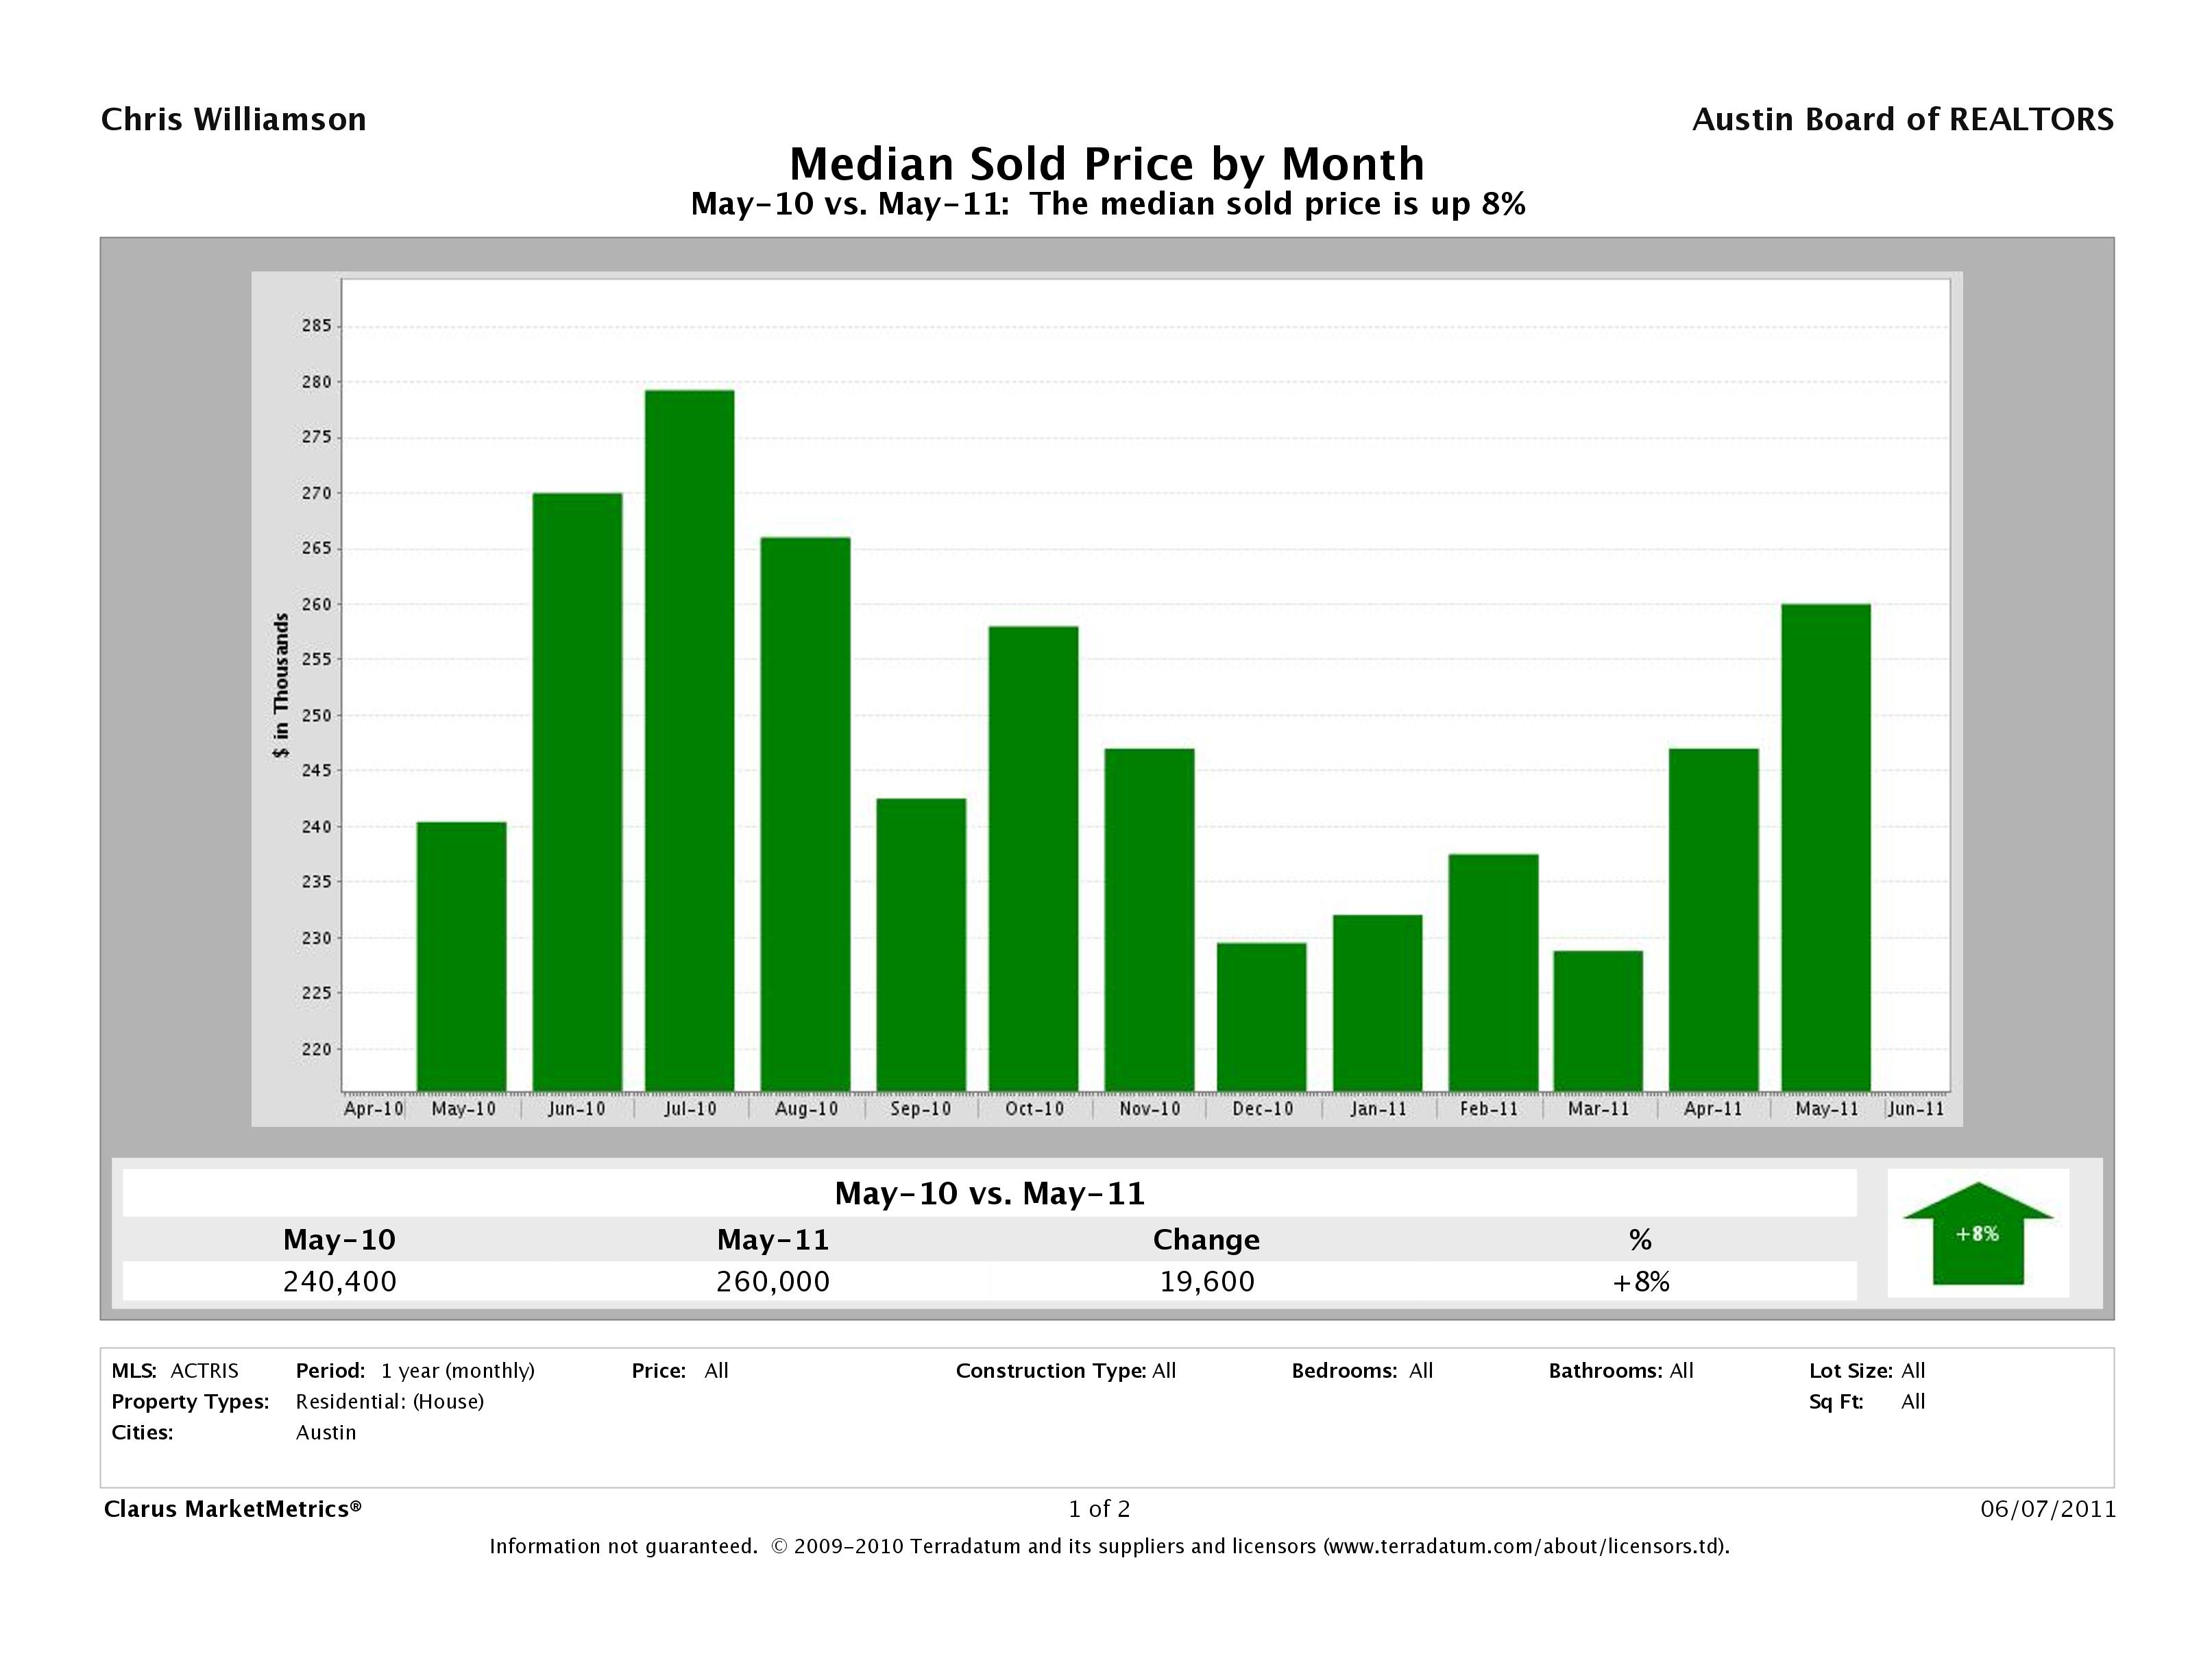 Austin median home price may 2011